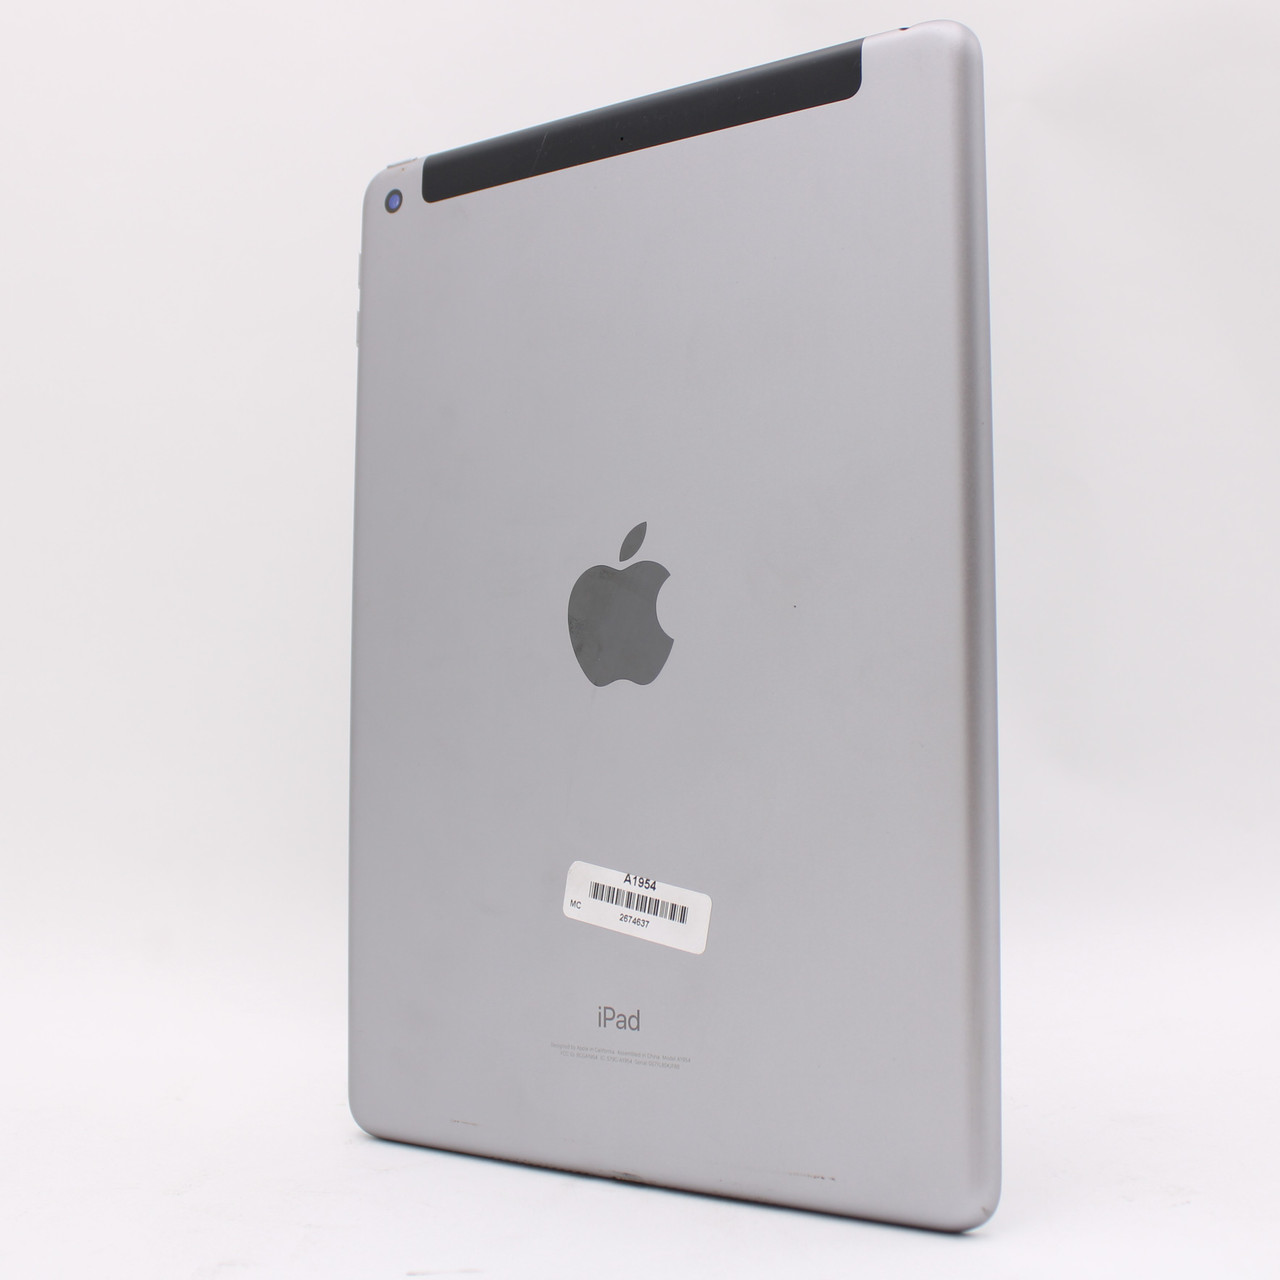 APPLE iPad 6th Gen Wi-Fi + 4G A1954 - 32 GB, Unlocked, SPACE GRAY - GOOD